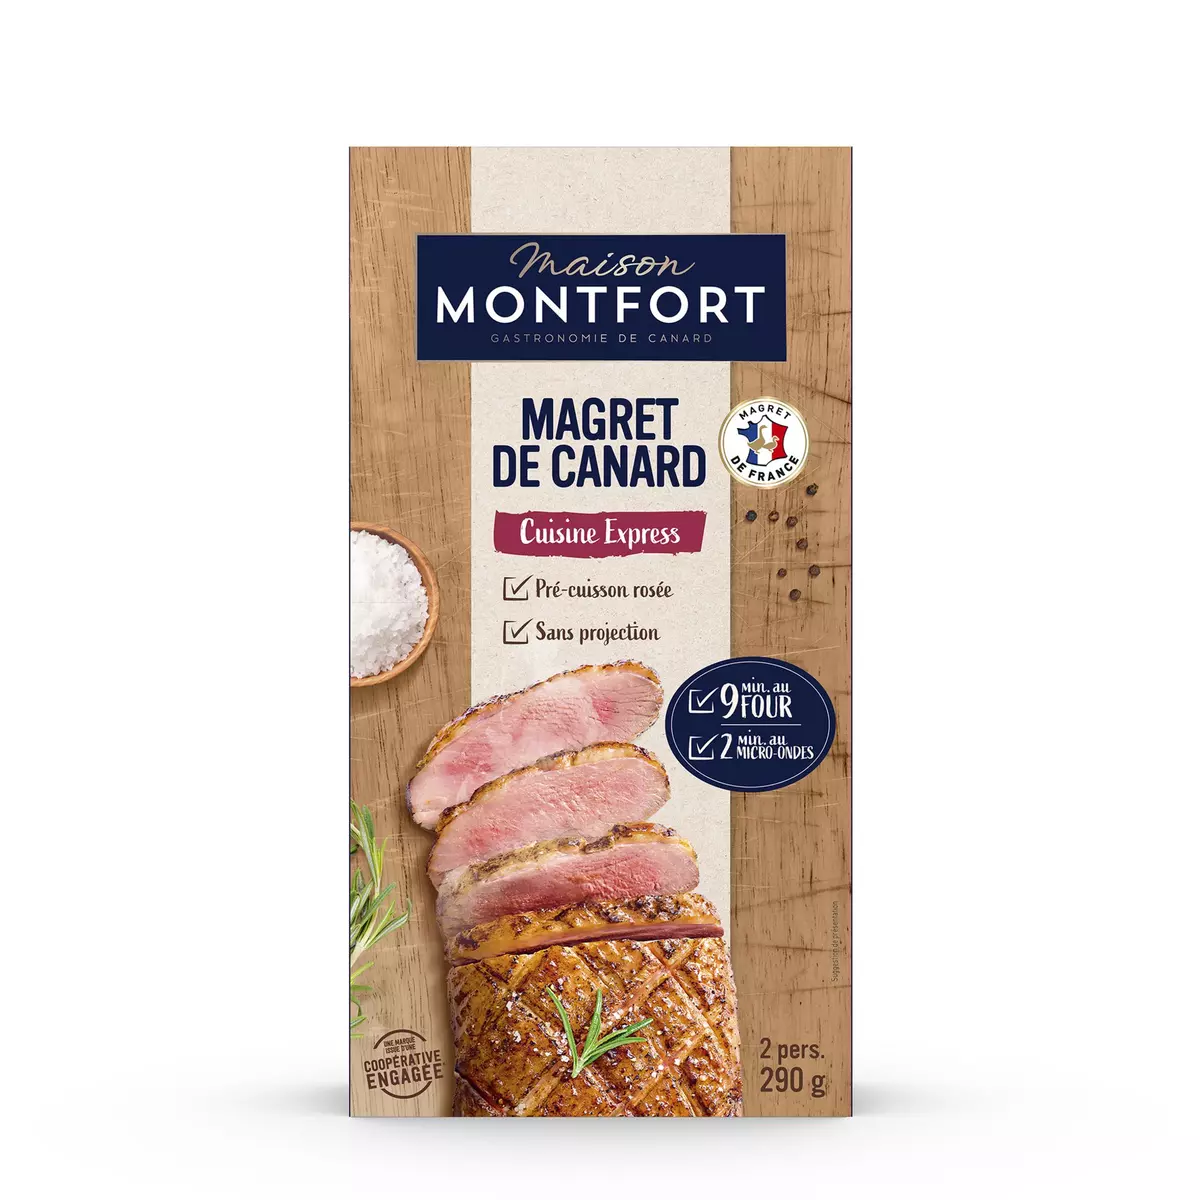 MAISON MONTFORT Magret de canard cuisine express 2 - 3 portions 290g